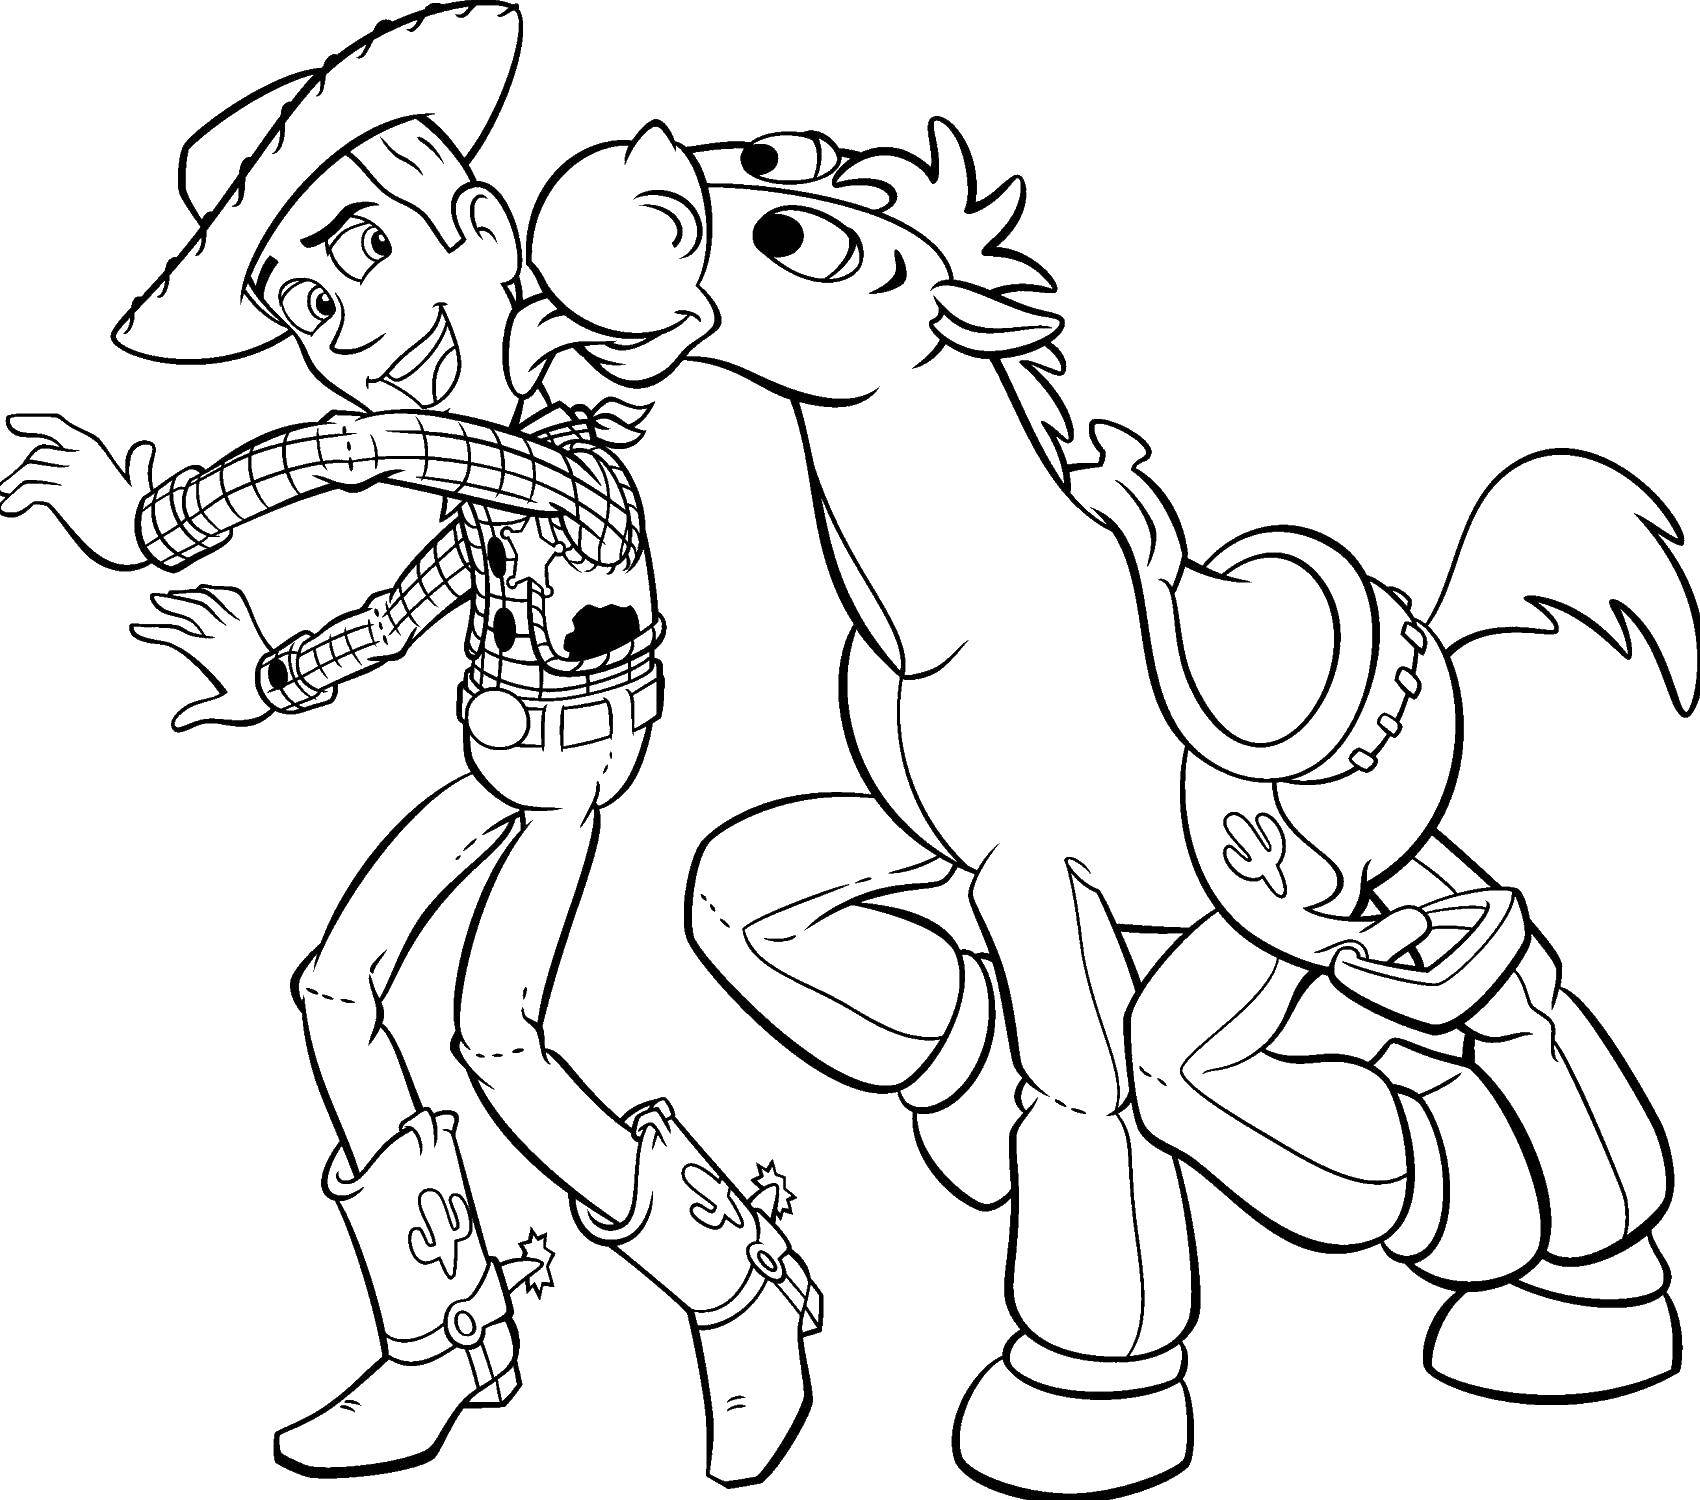 Название: Раскраска Вуди с конем. Категория: Дети играют. Теги: Вуди, игрушки.